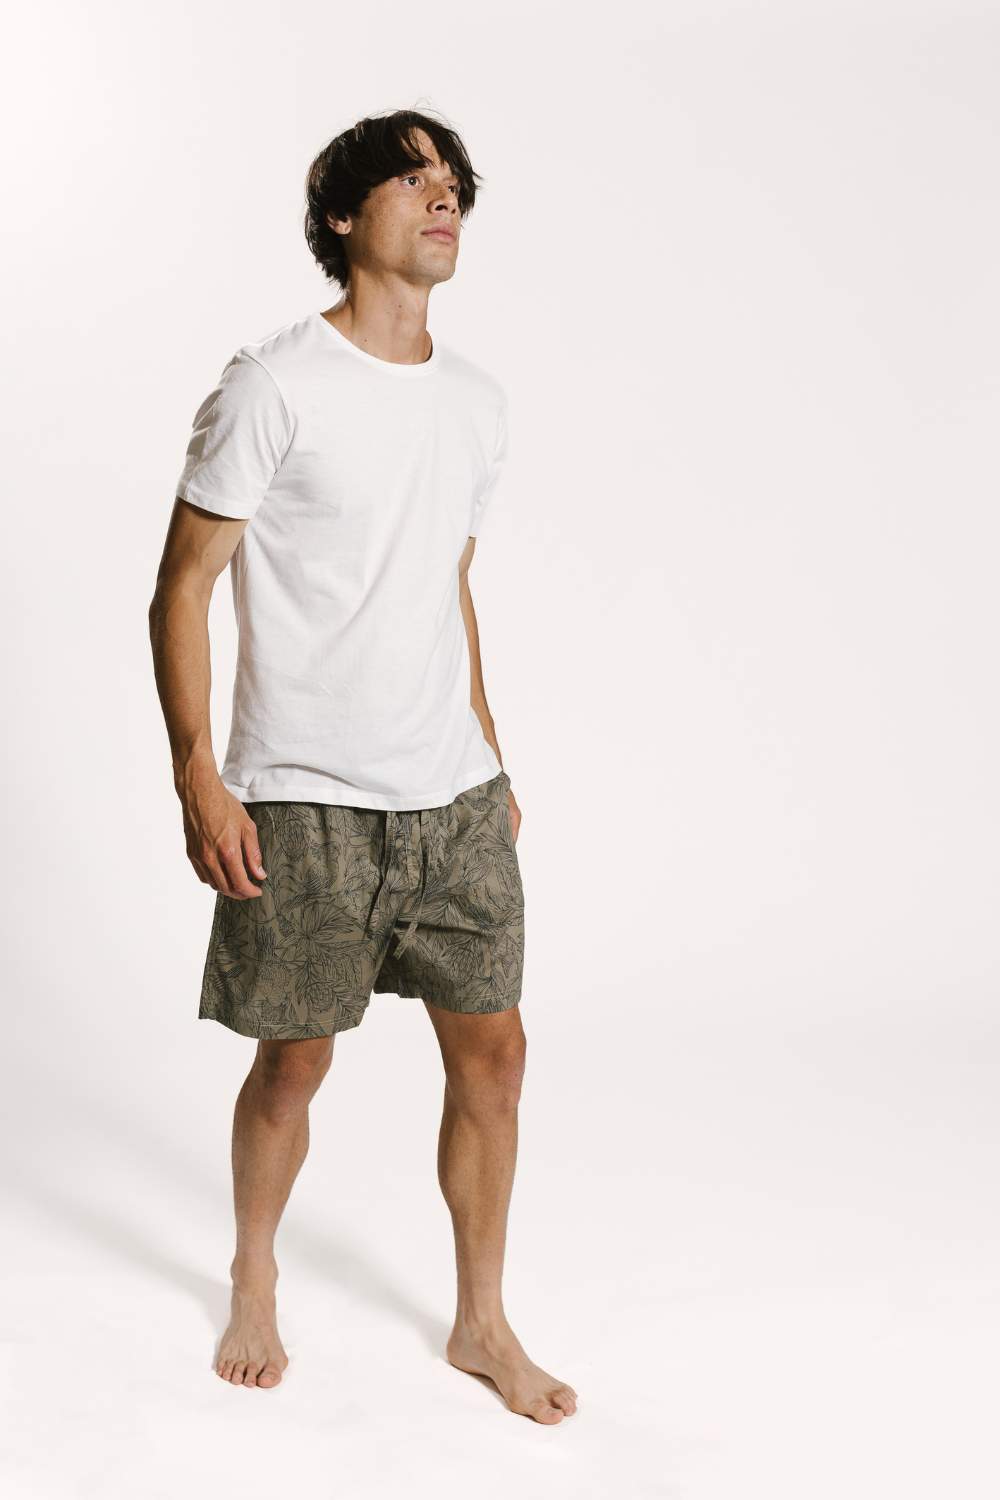 Mens cotton sleepwear shorts set with organic cotton white tee